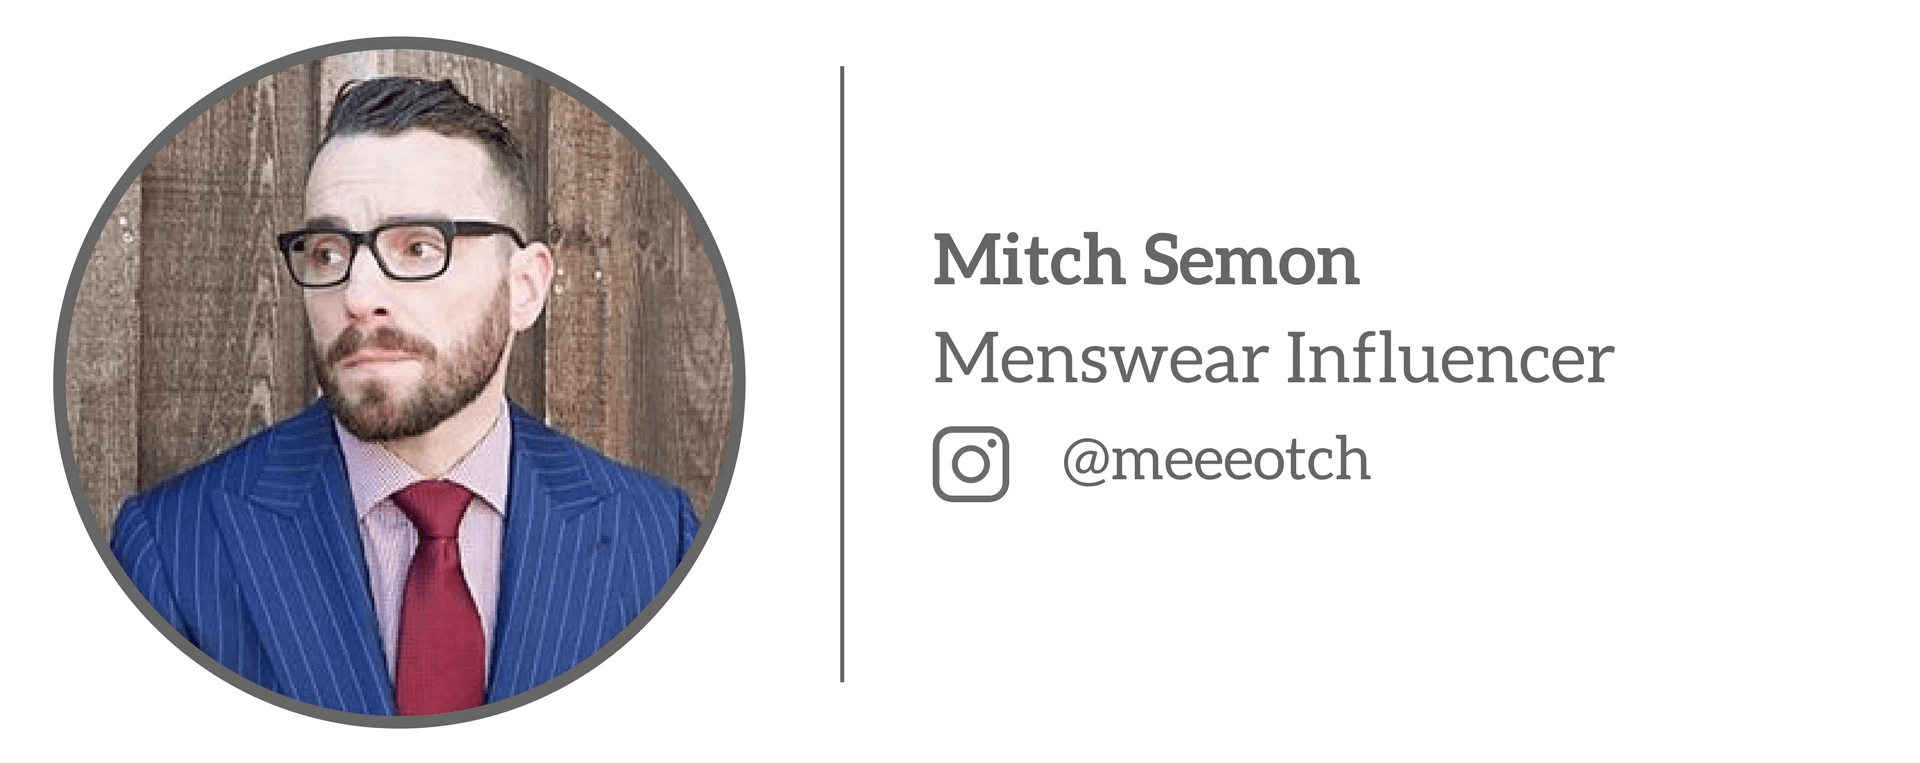 Mitch Semon - Menswear Influence “Chi tiết”